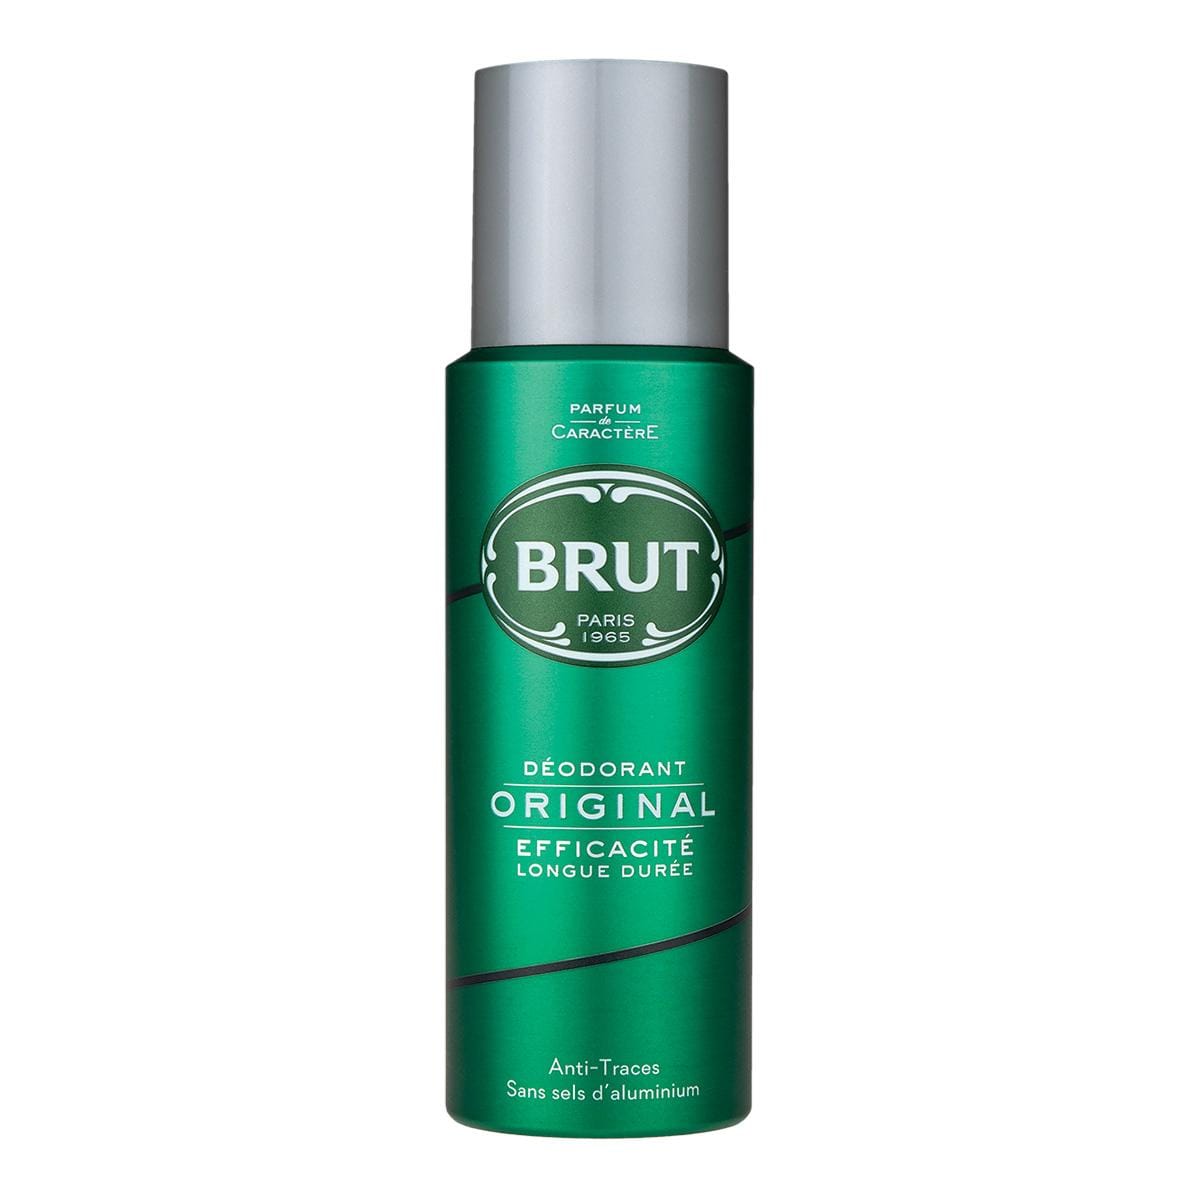 Brut Deodorant Orignal Body Spray for Men - 200ml